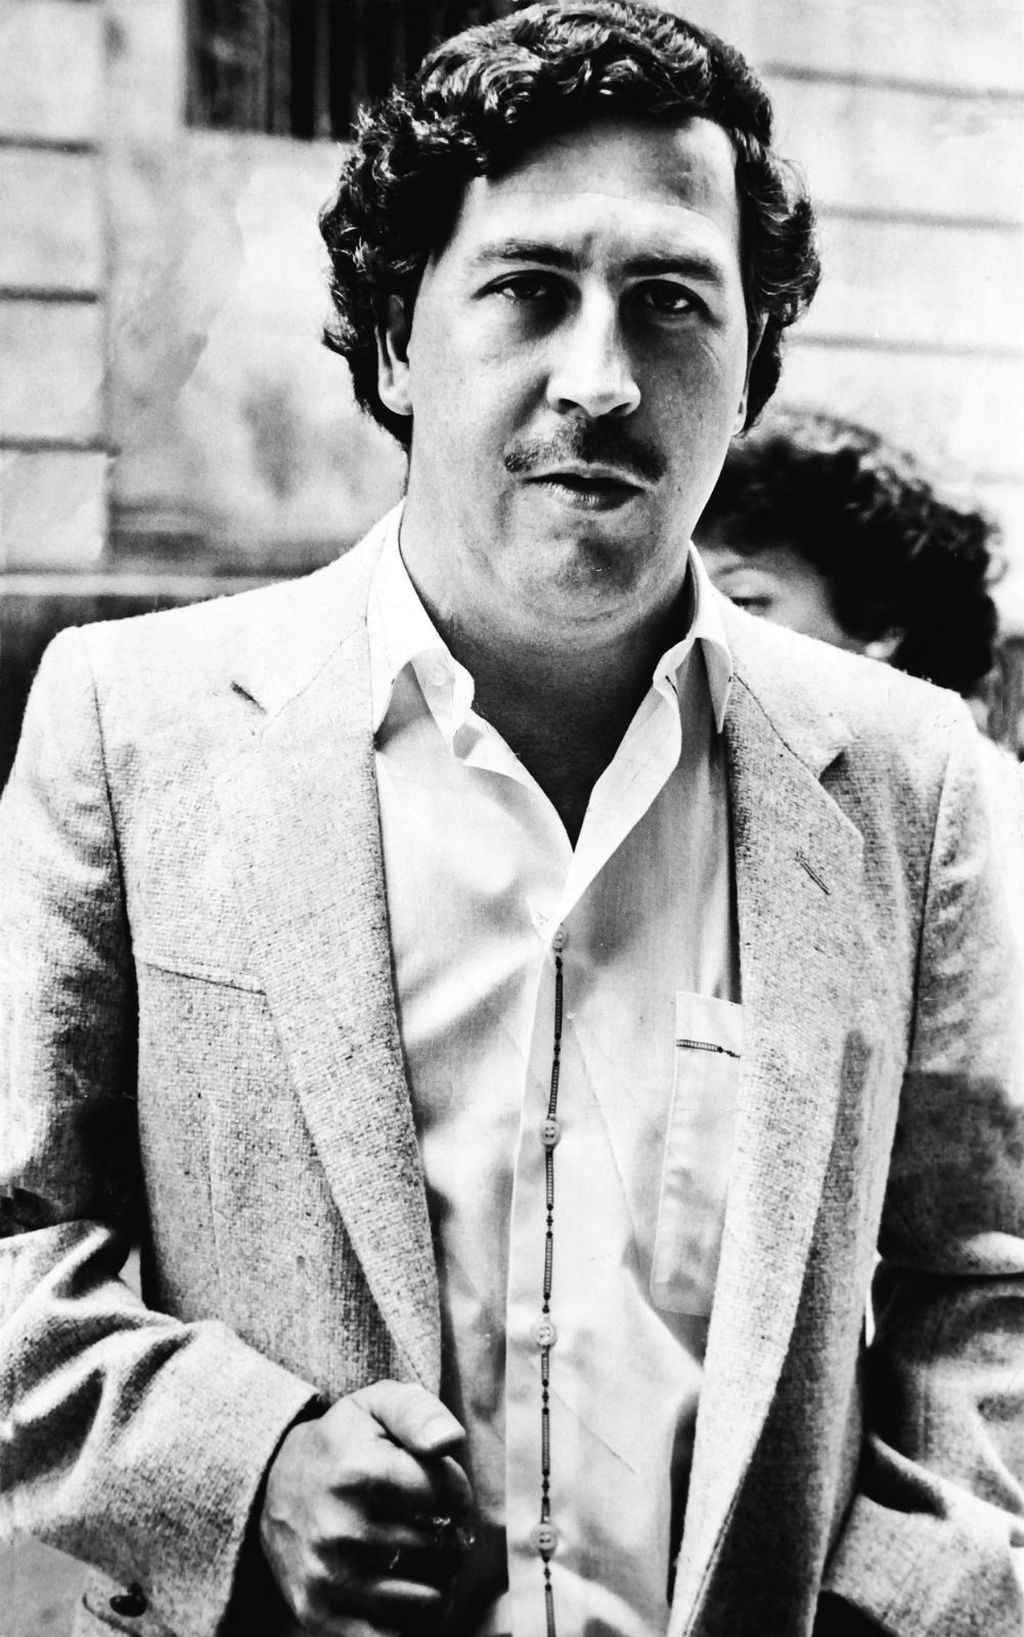 Kolumbijski kralj kokaina Pablo Escobar